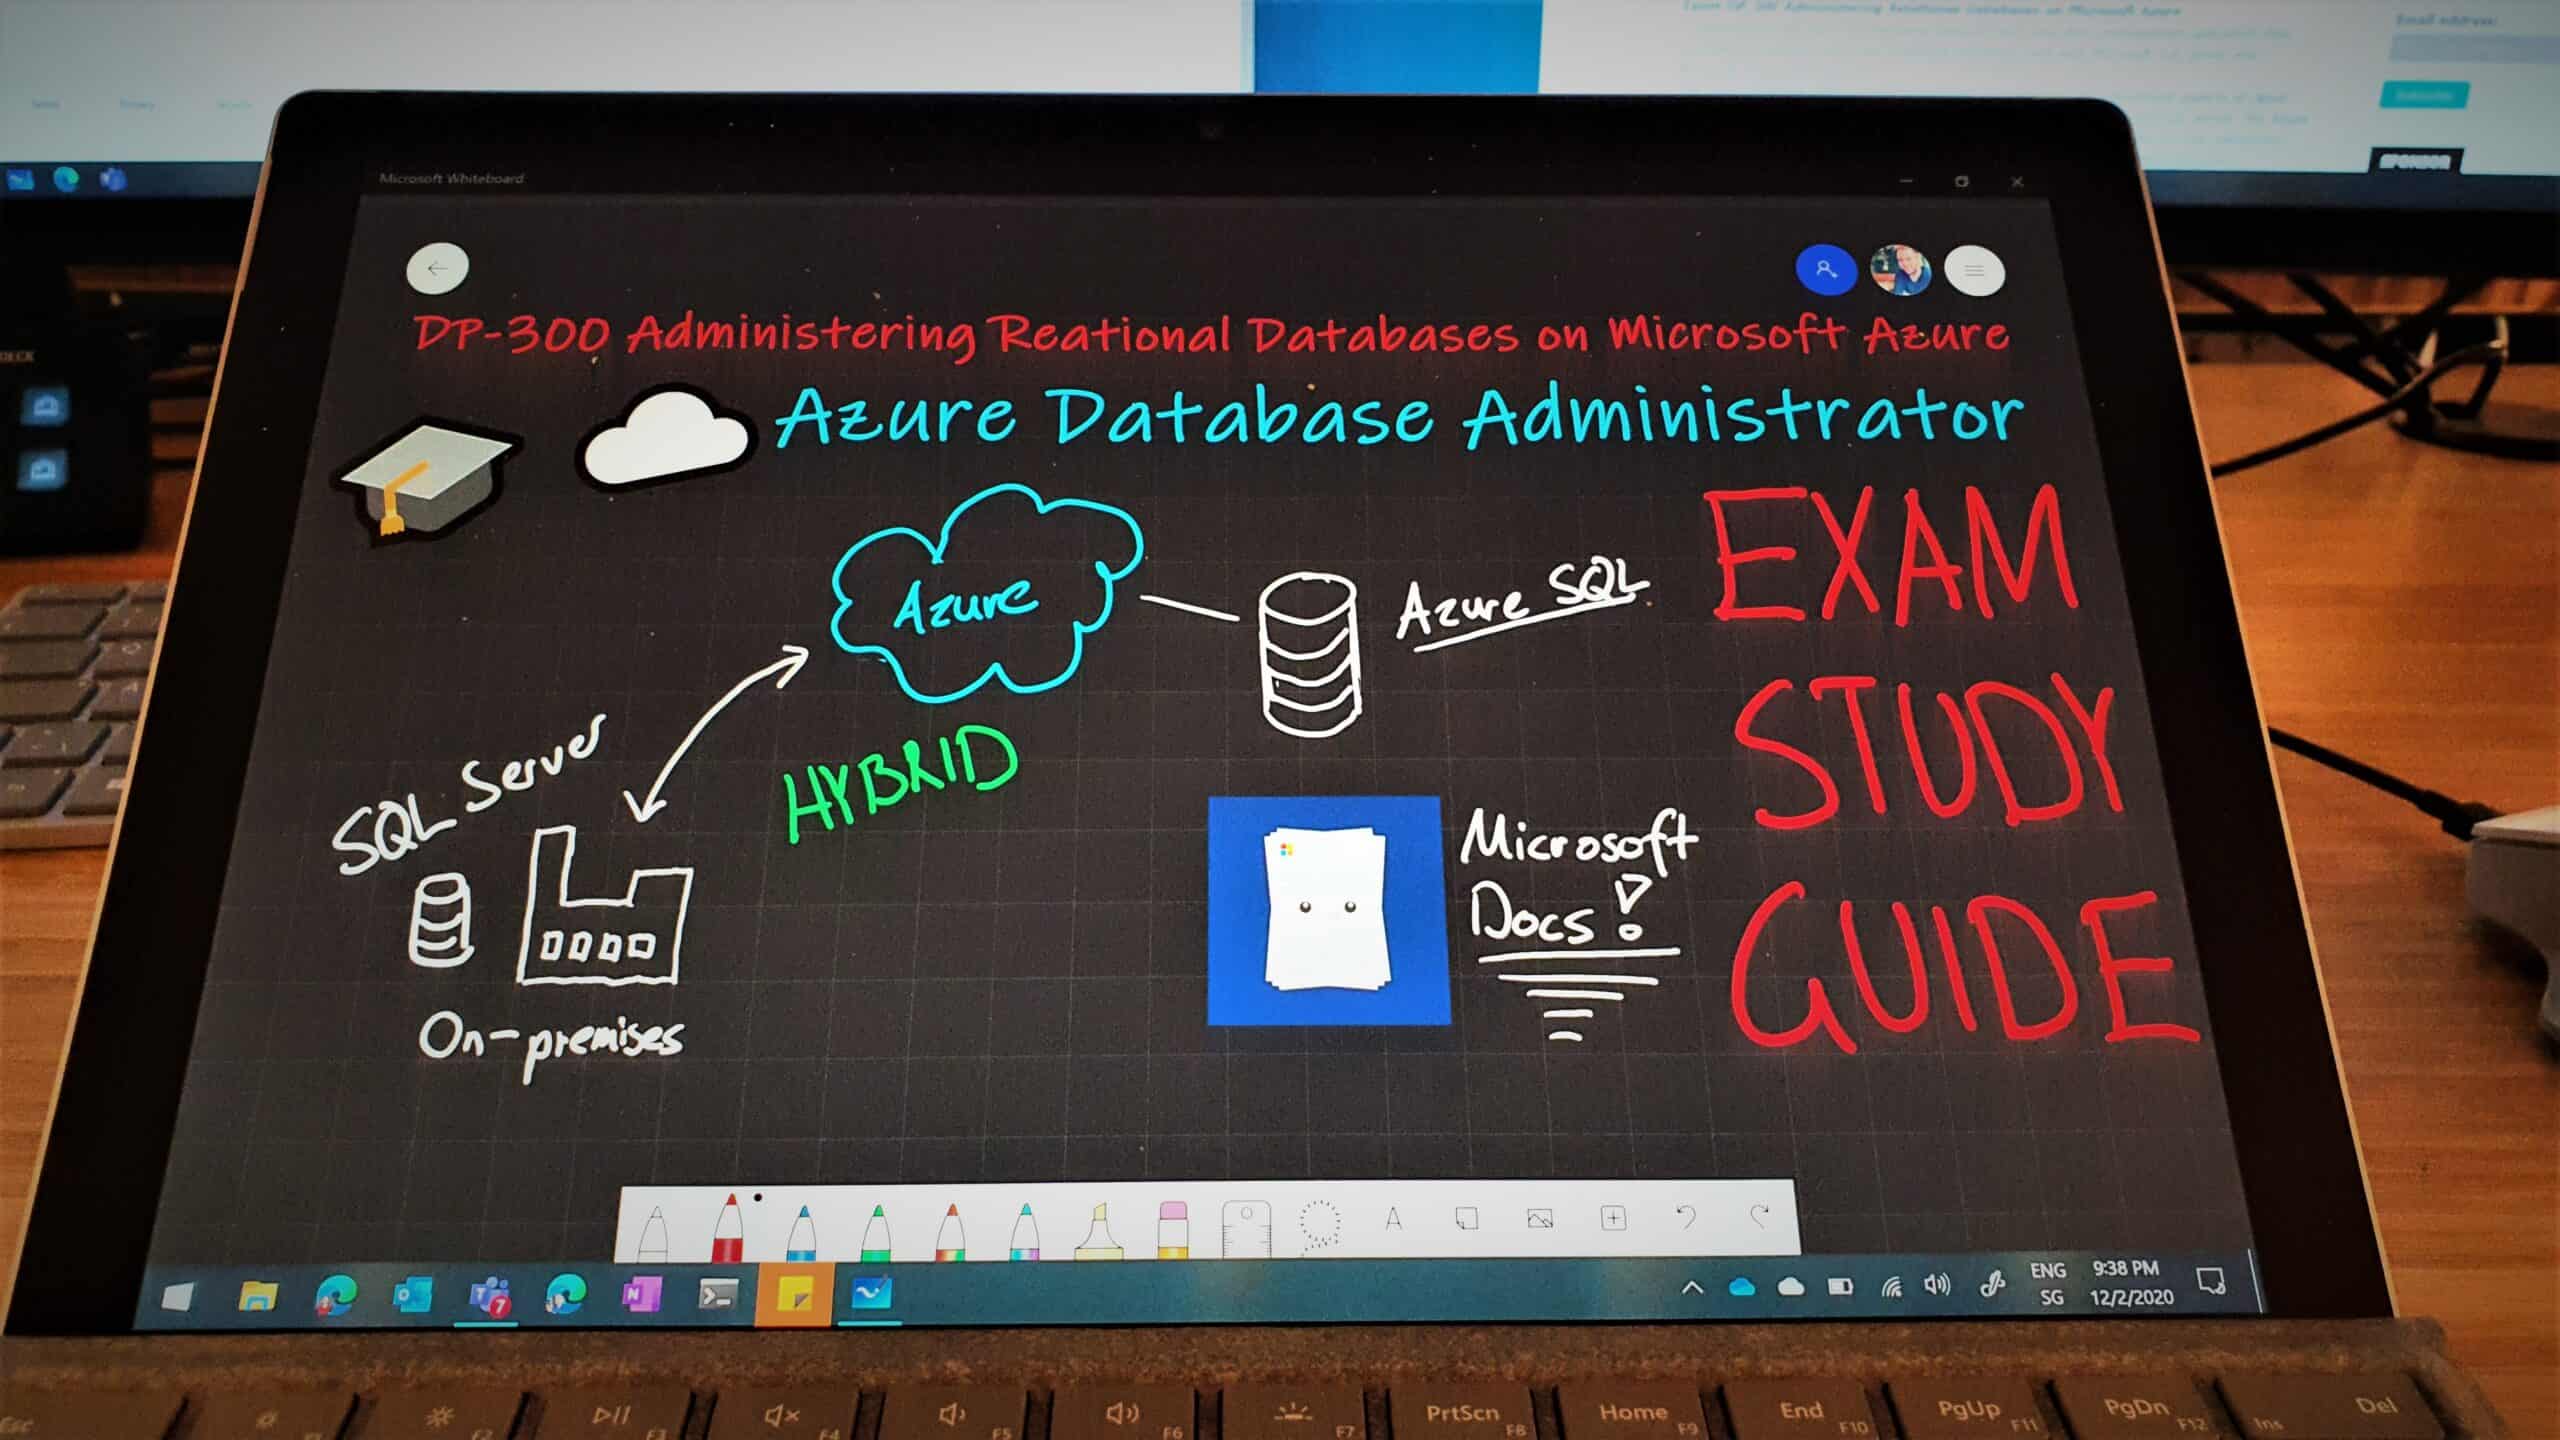 DP-300 Exam Study Guide Microsoft Azure Database Administrator